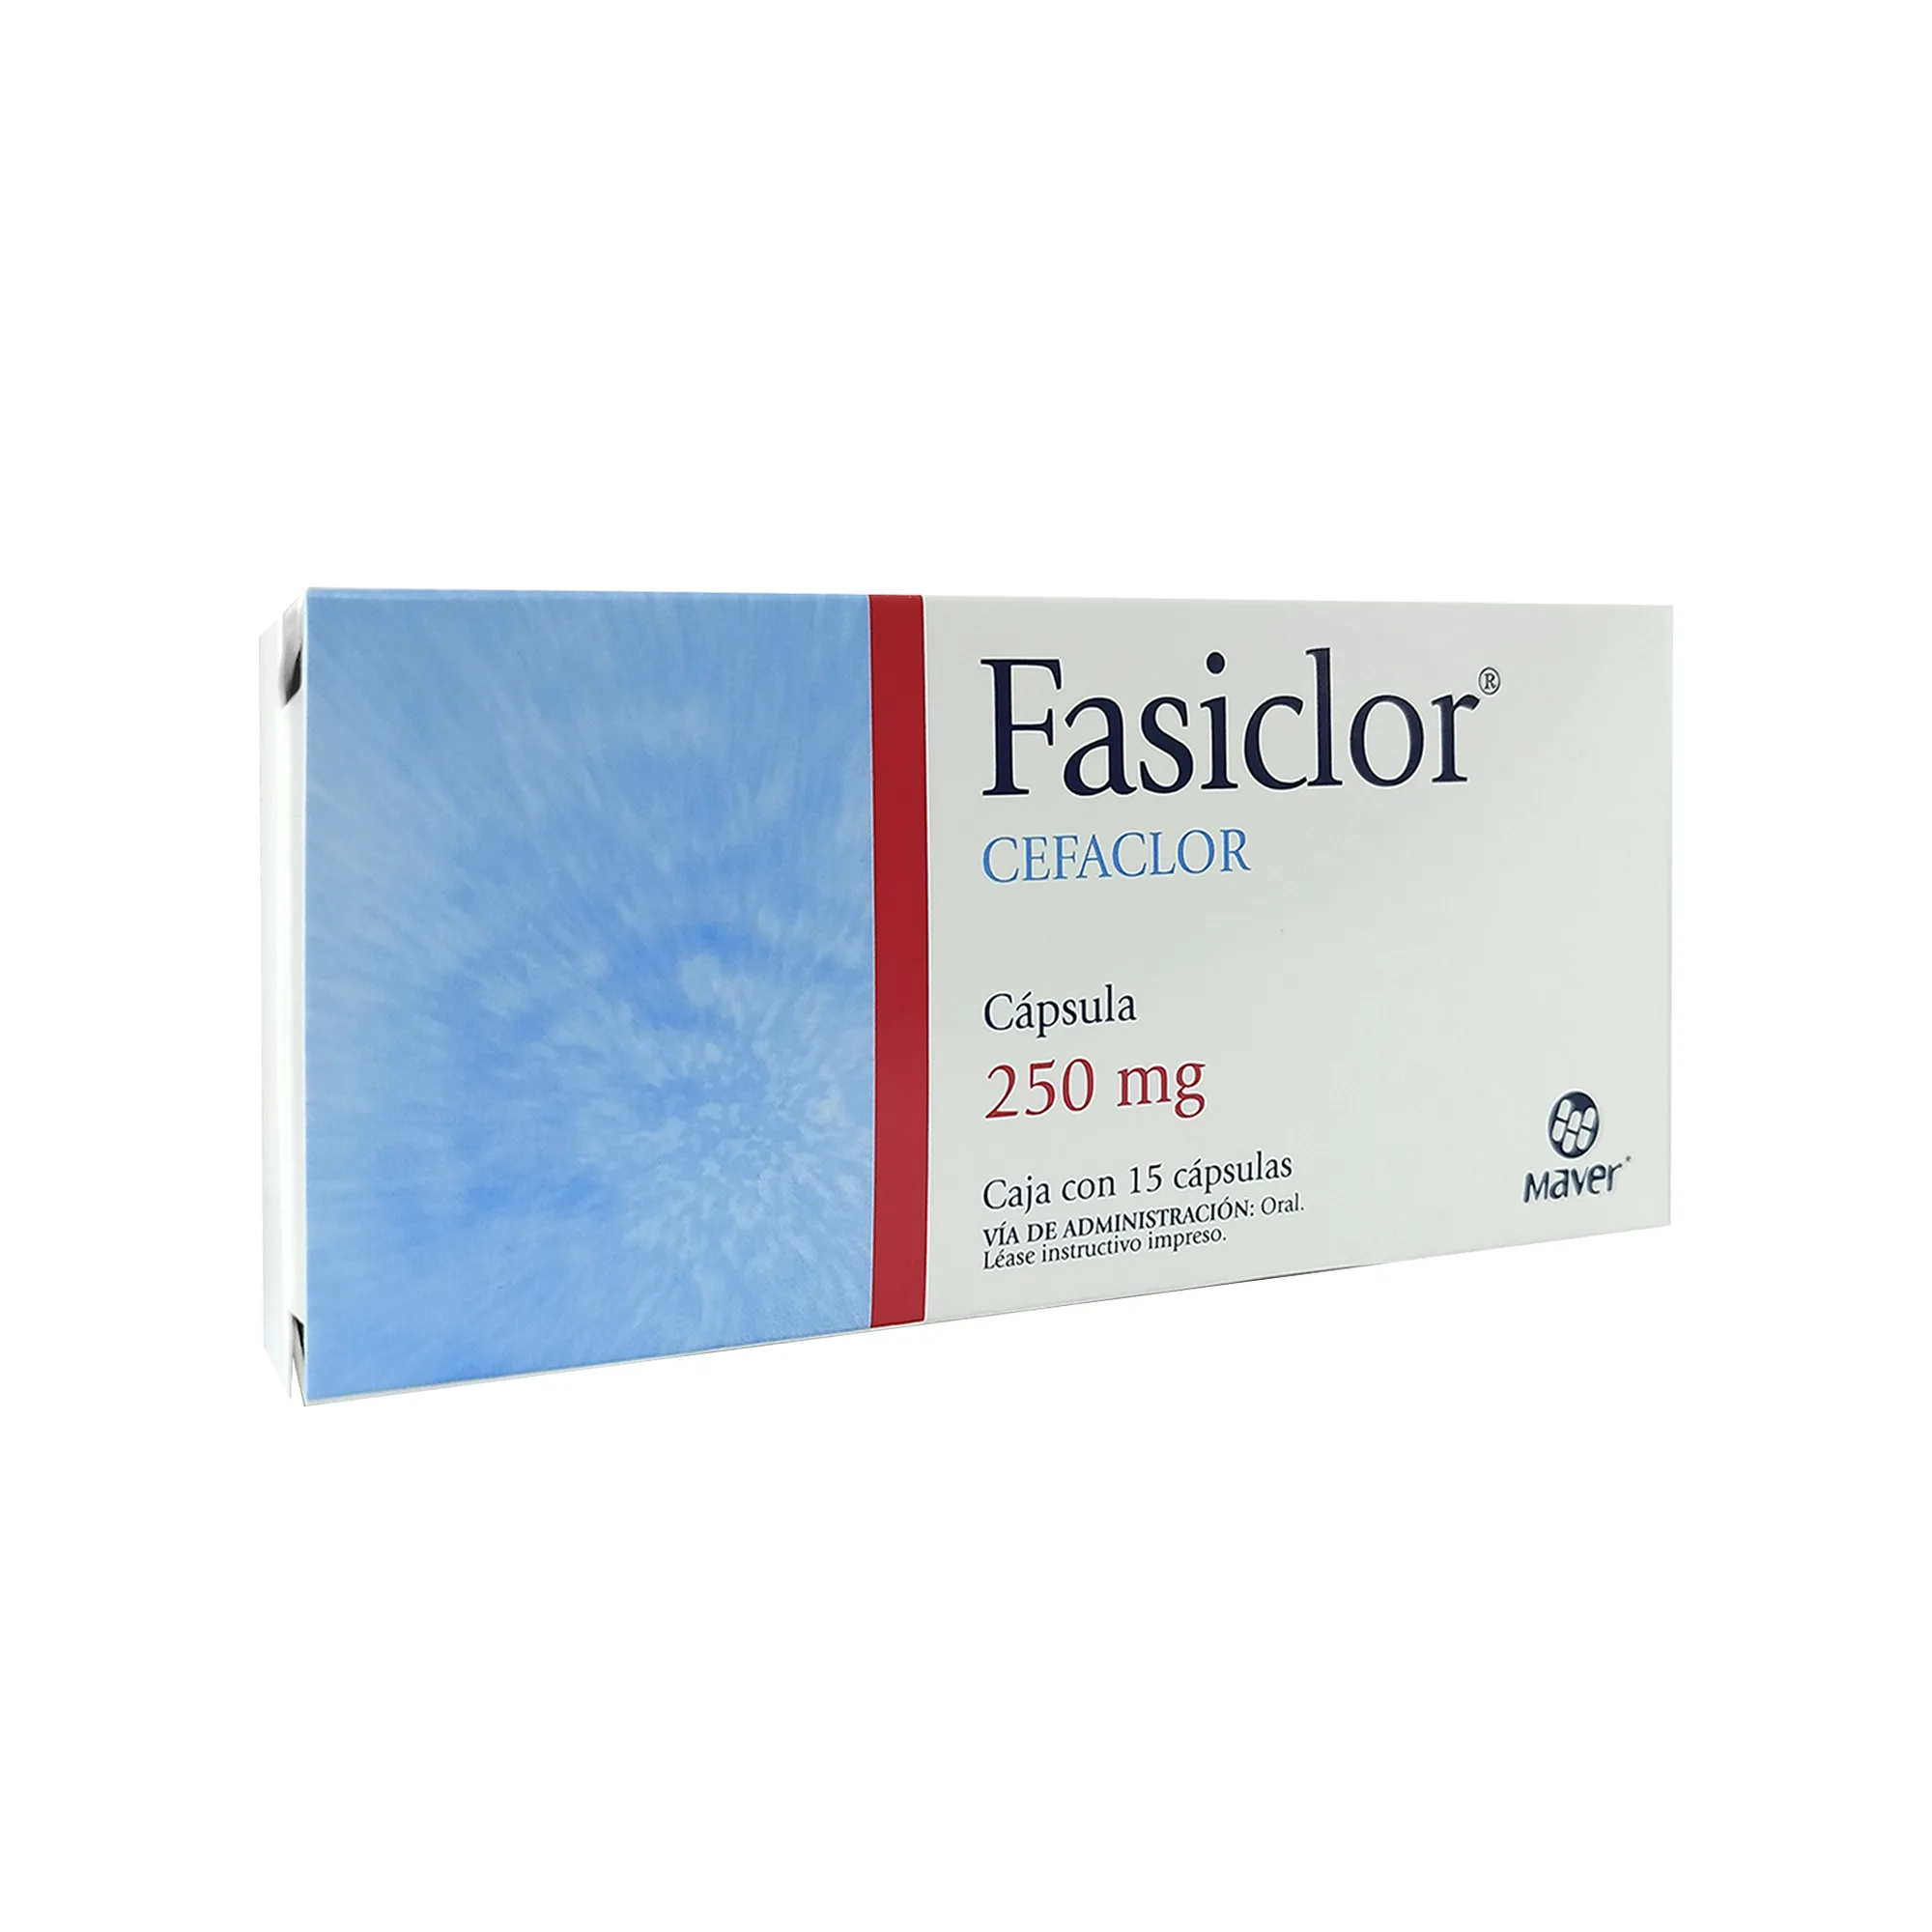 7502009741456 1 fasiclor cefaclor 250 mg cápsula 15 cápsula(s)